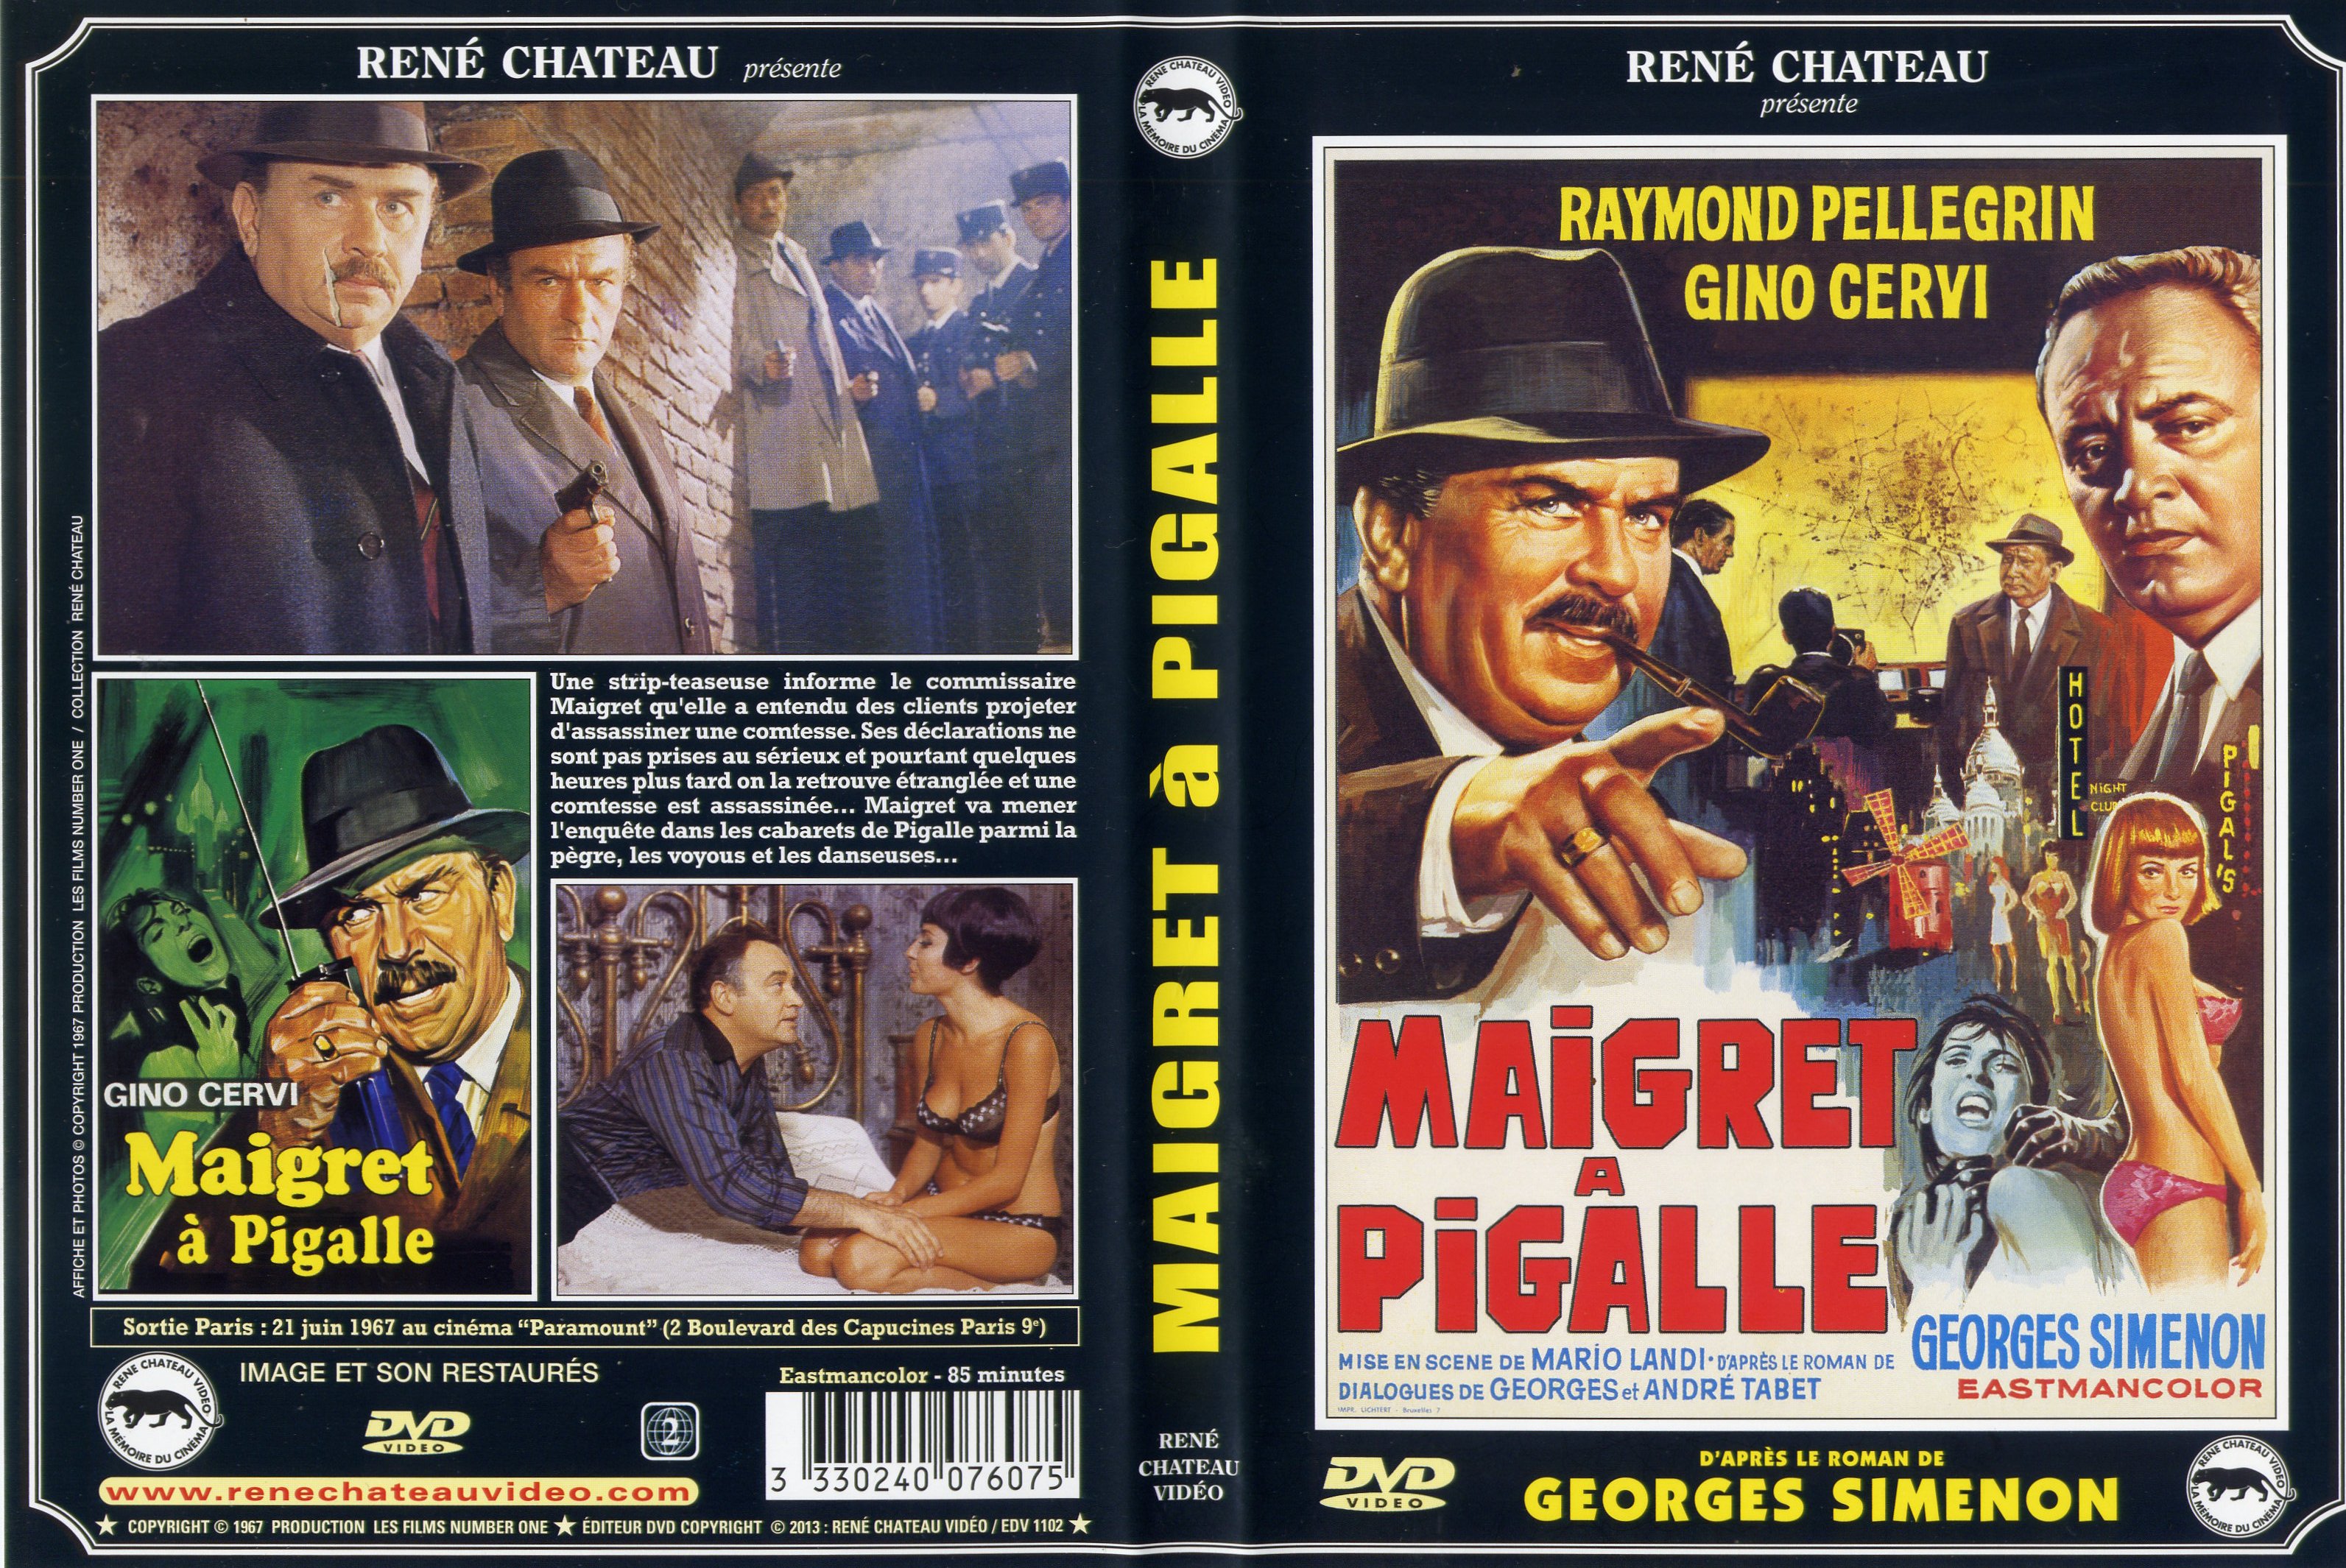 Jaquette DVD Maigret  Pigalle